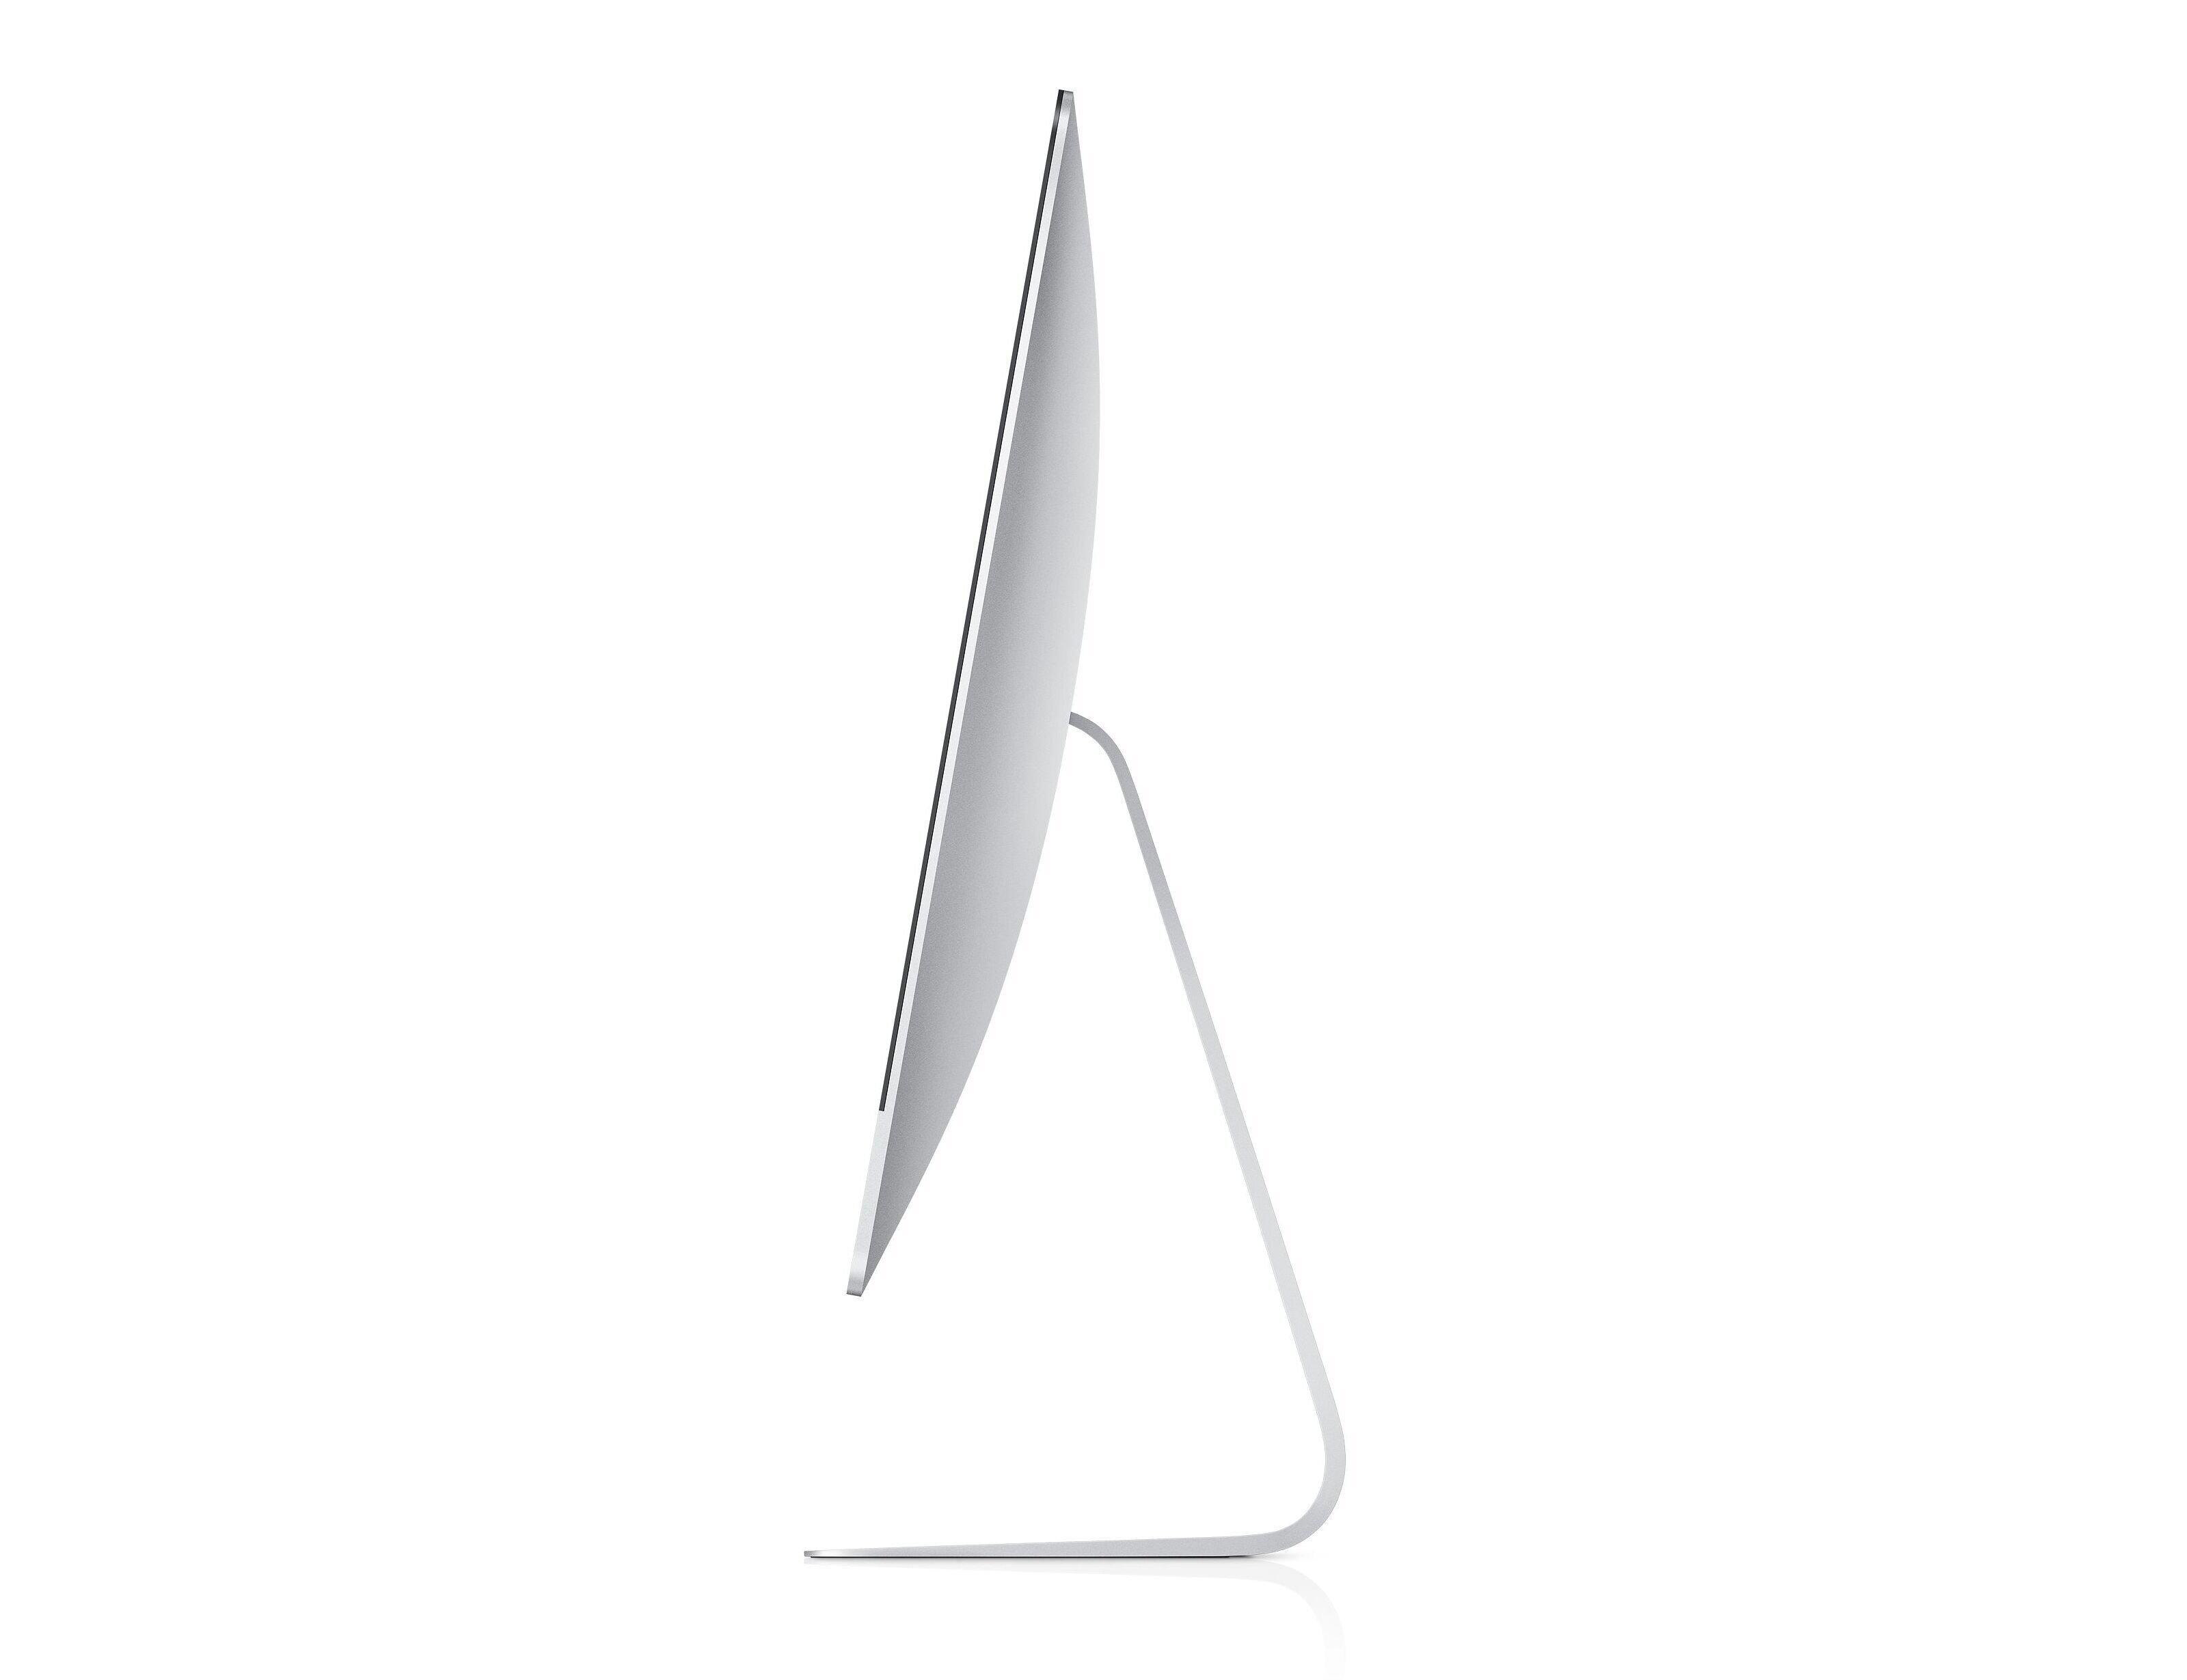 Apple  Refurbished iMac 27" 5K 2017 Core i5 3,5 Ghz 8 Gb 2 Tb HDD Silber - Wie Neu 